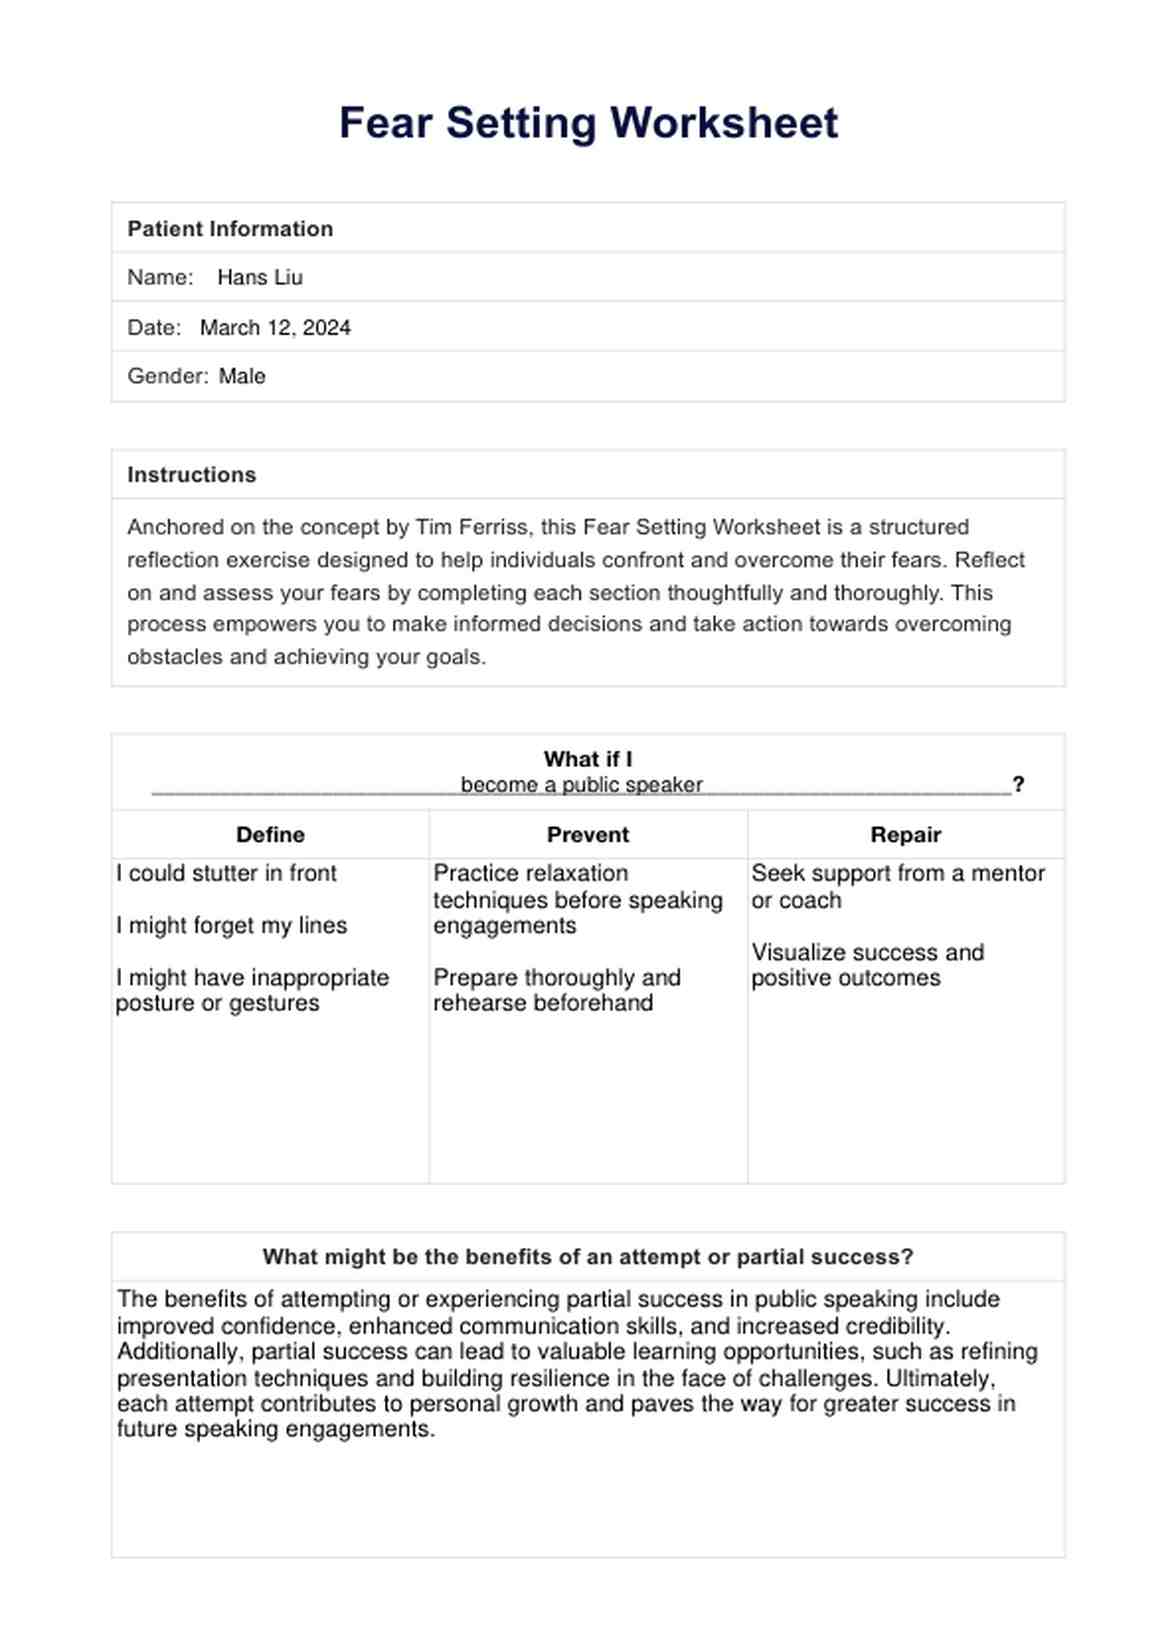 Fear Setting Worksheet PDF Example